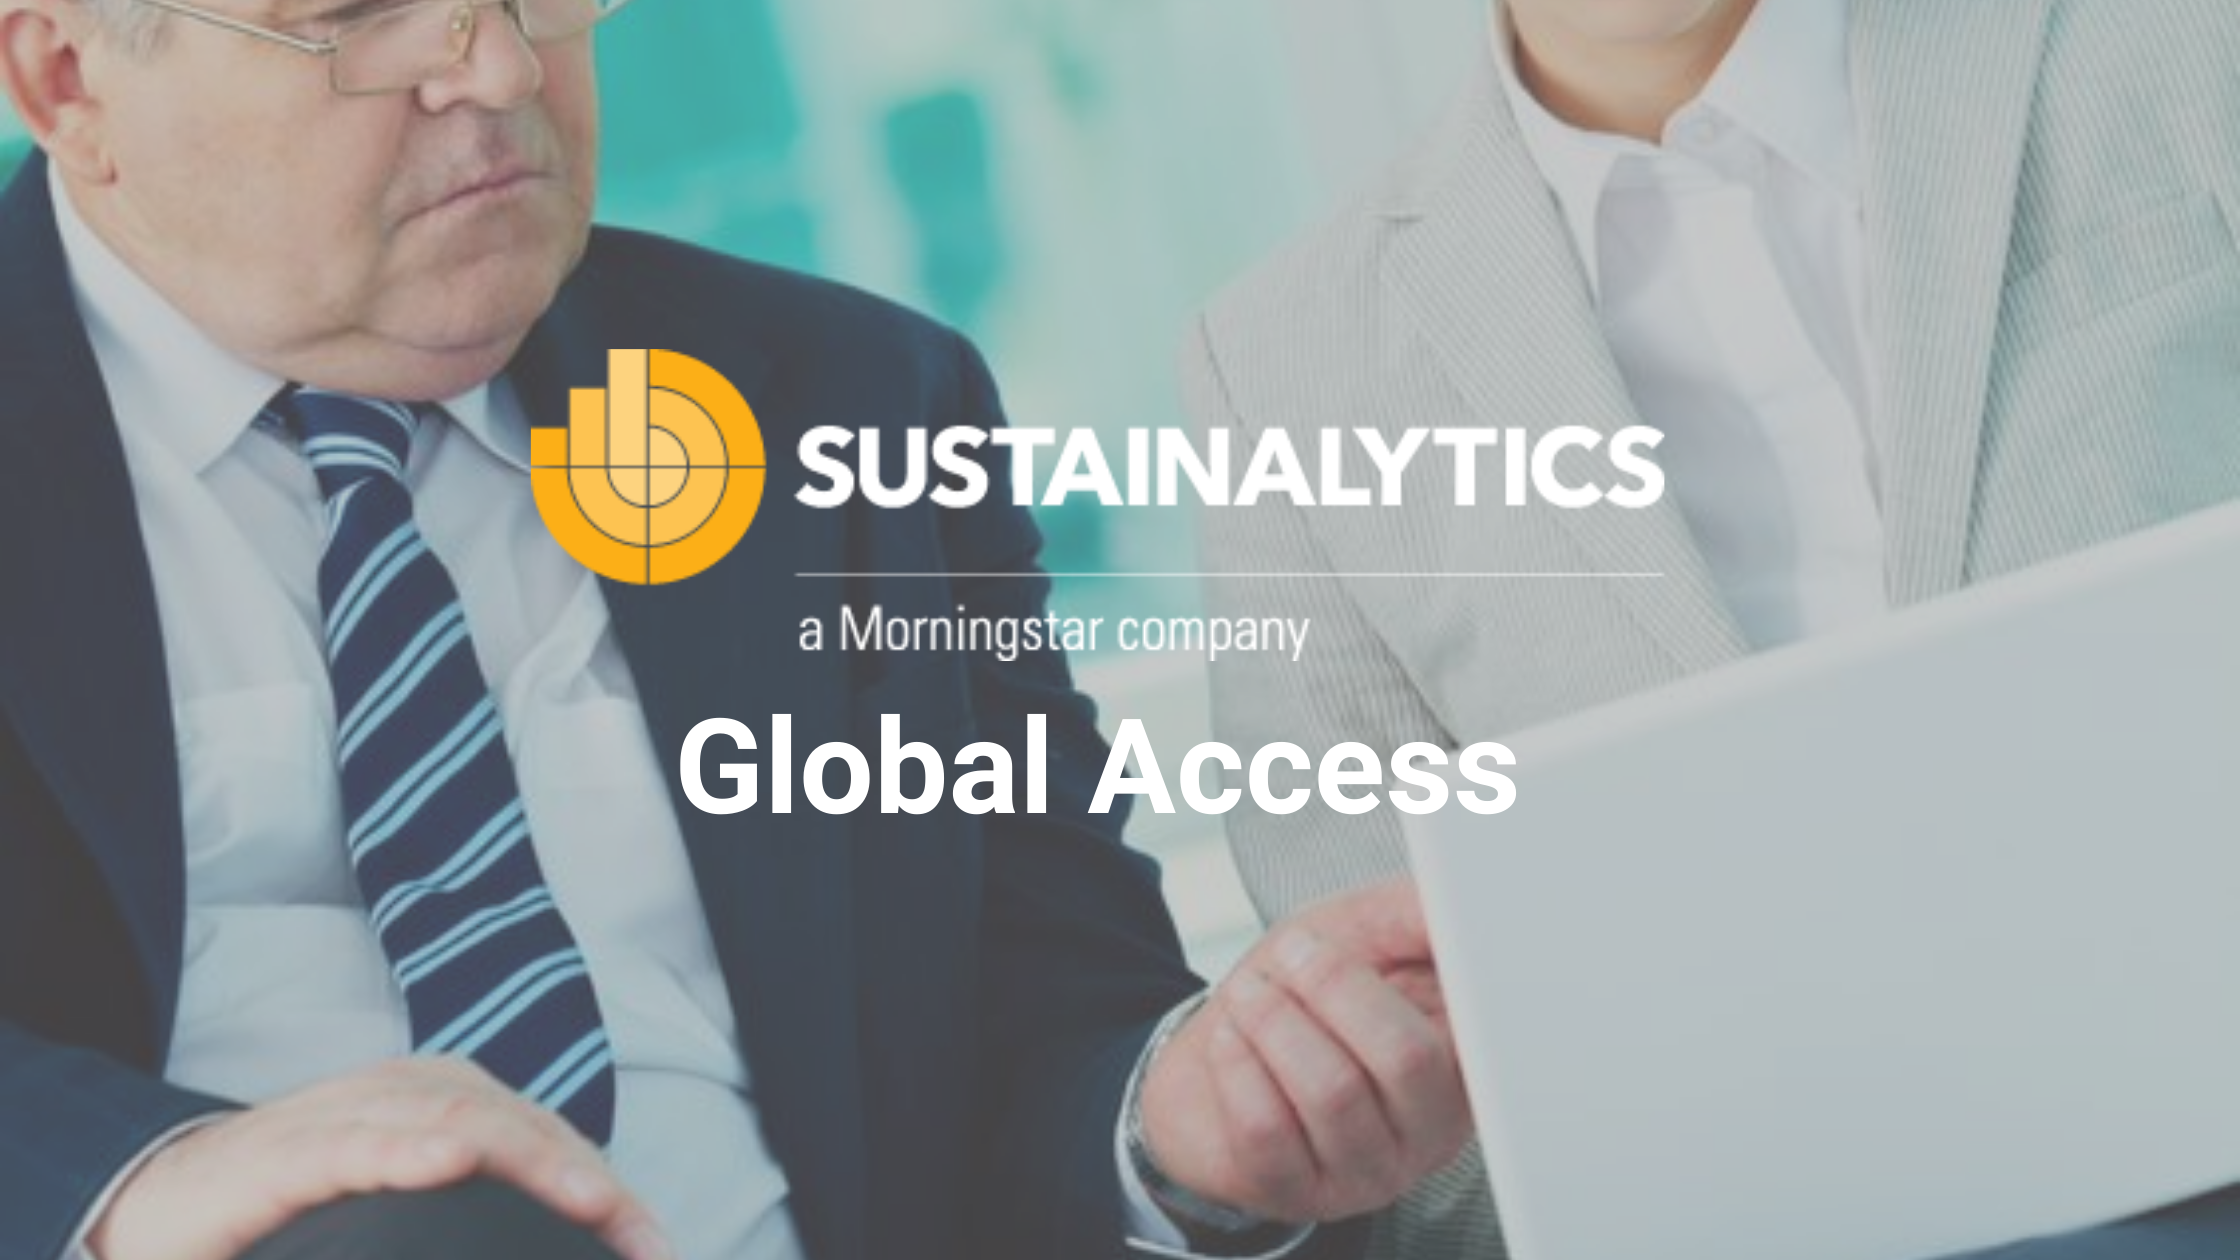 global access